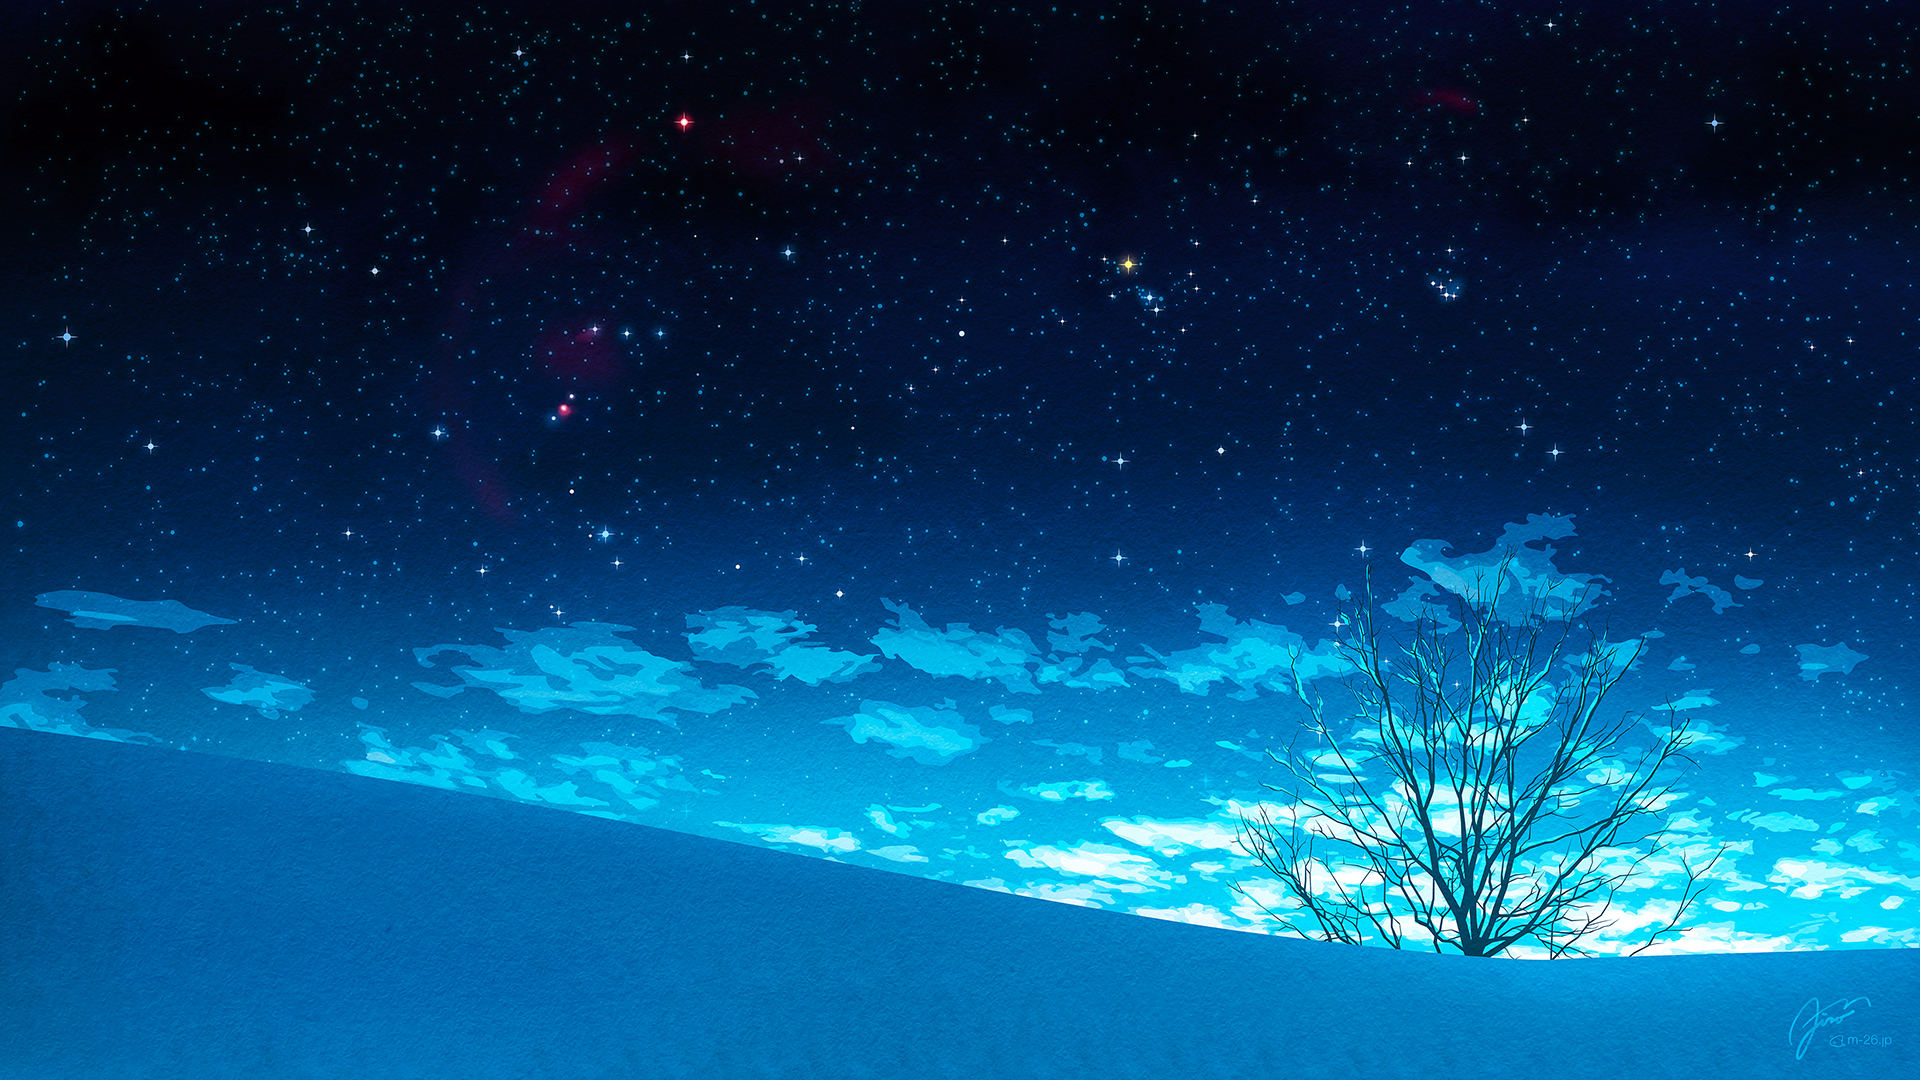 M26 Digital Art Artwork Illustration Digital Painting Landscape Nature Stars Starred Sky Snow Trees  1920x1080